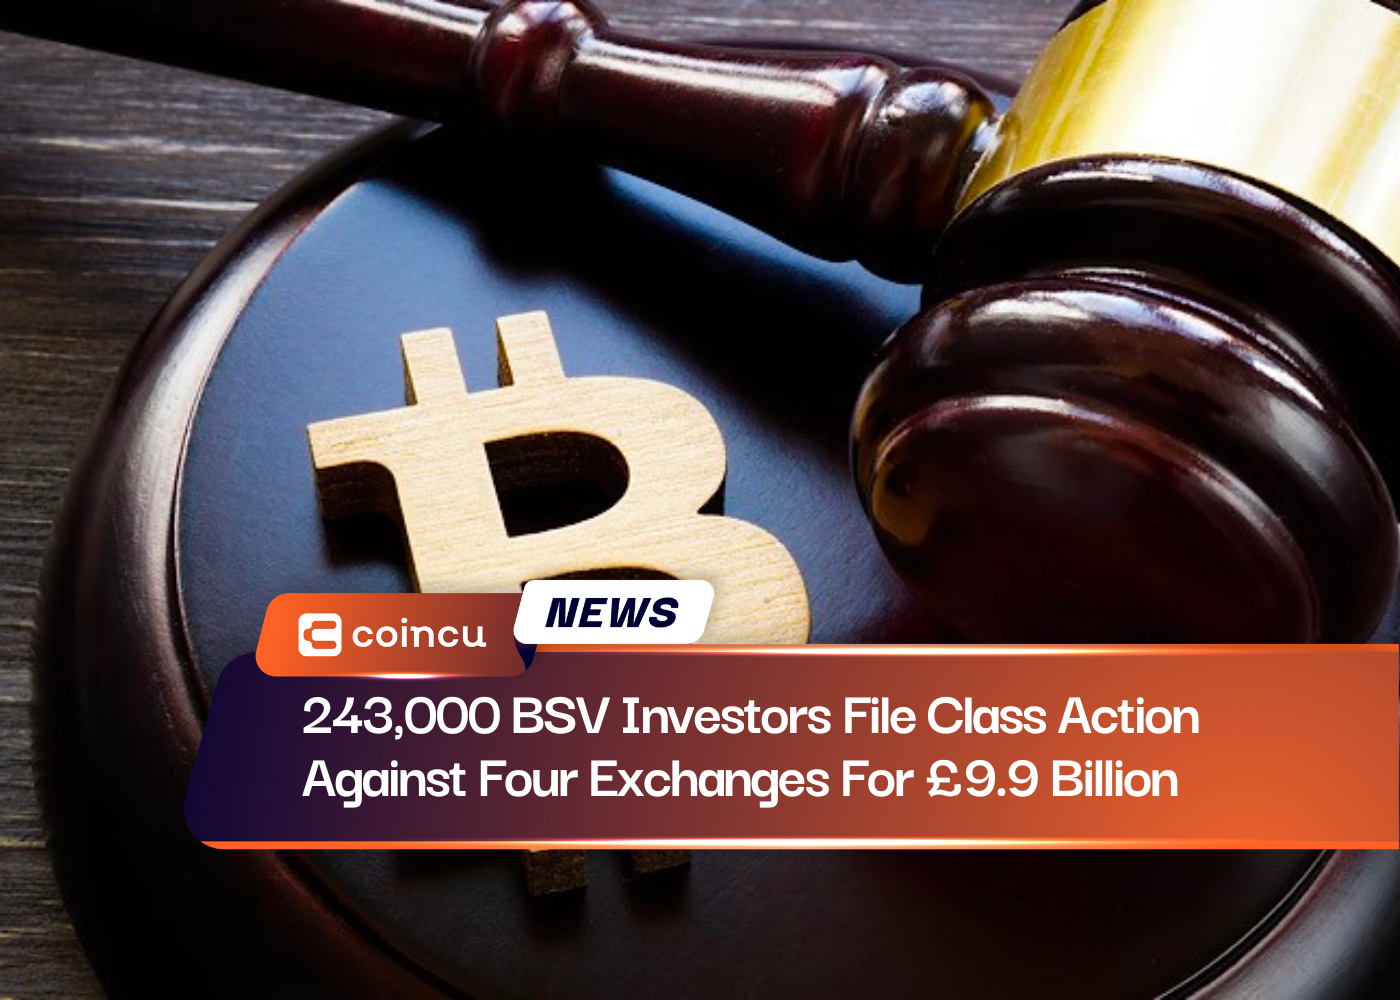 243,000 BSV Investors File Class Action Against Four Exchanges For £9.9 Billion